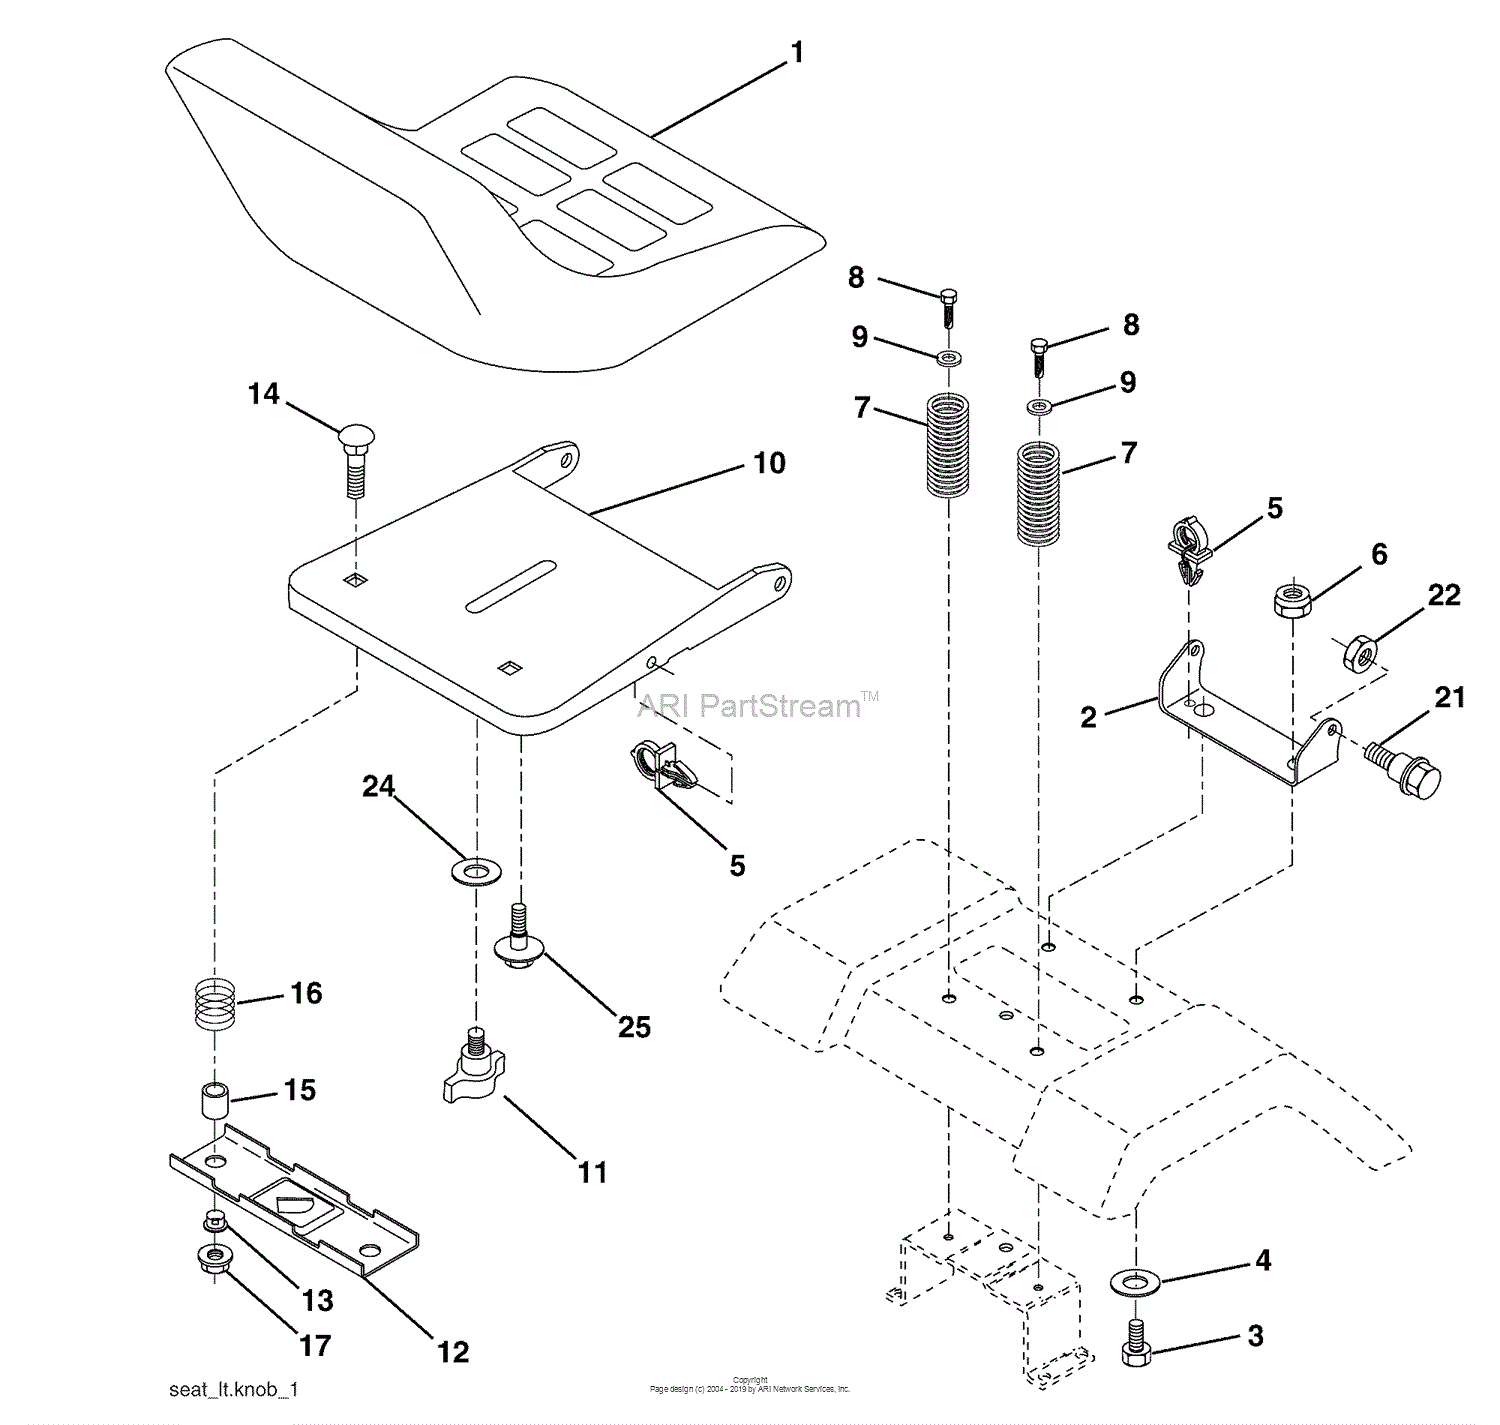 wiring diagram for 2448 46 ballaft